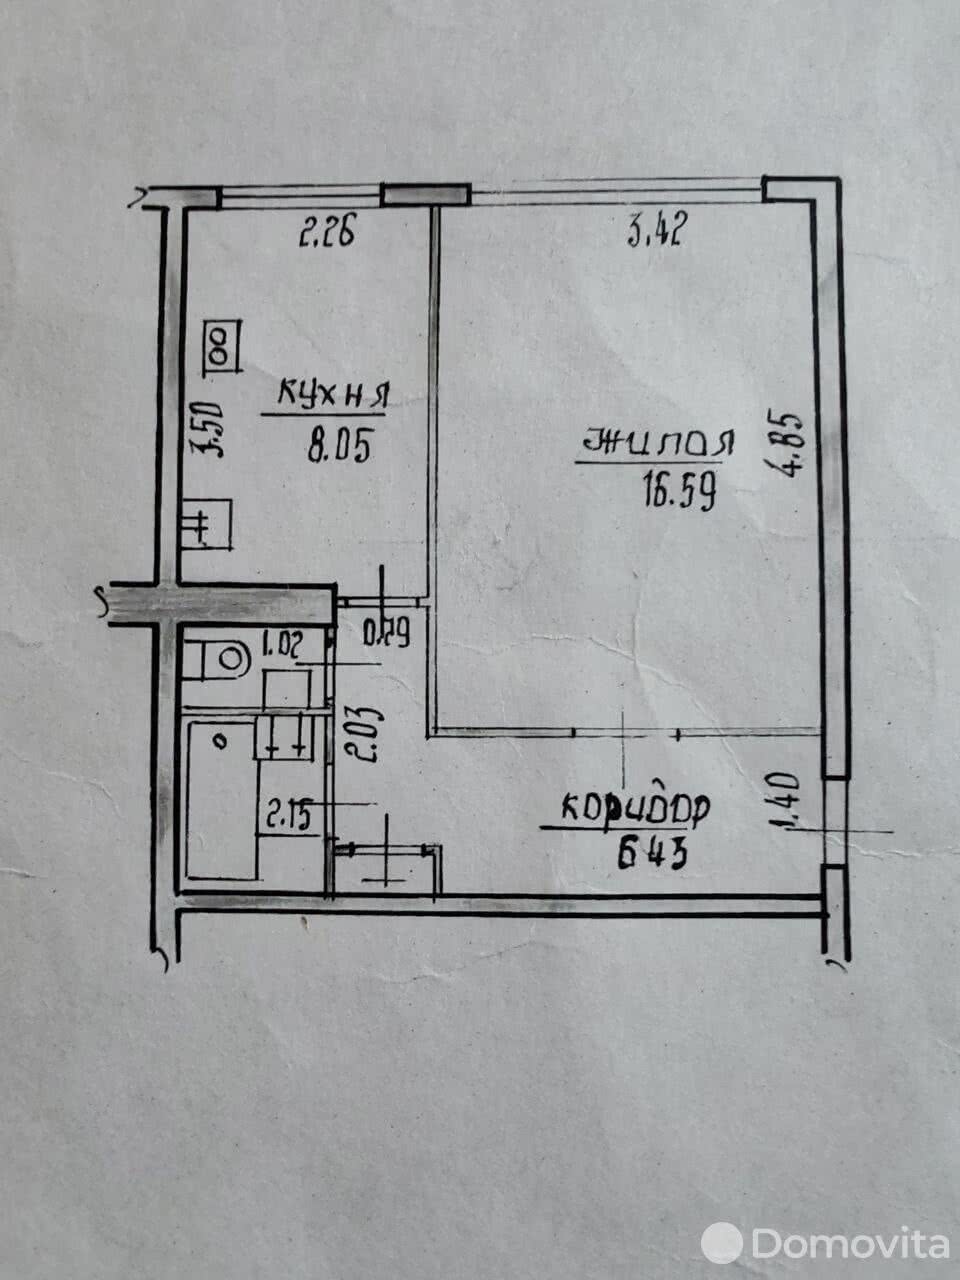 Цена продажи квартиры, Могилев, ул. Симонова, д. 43